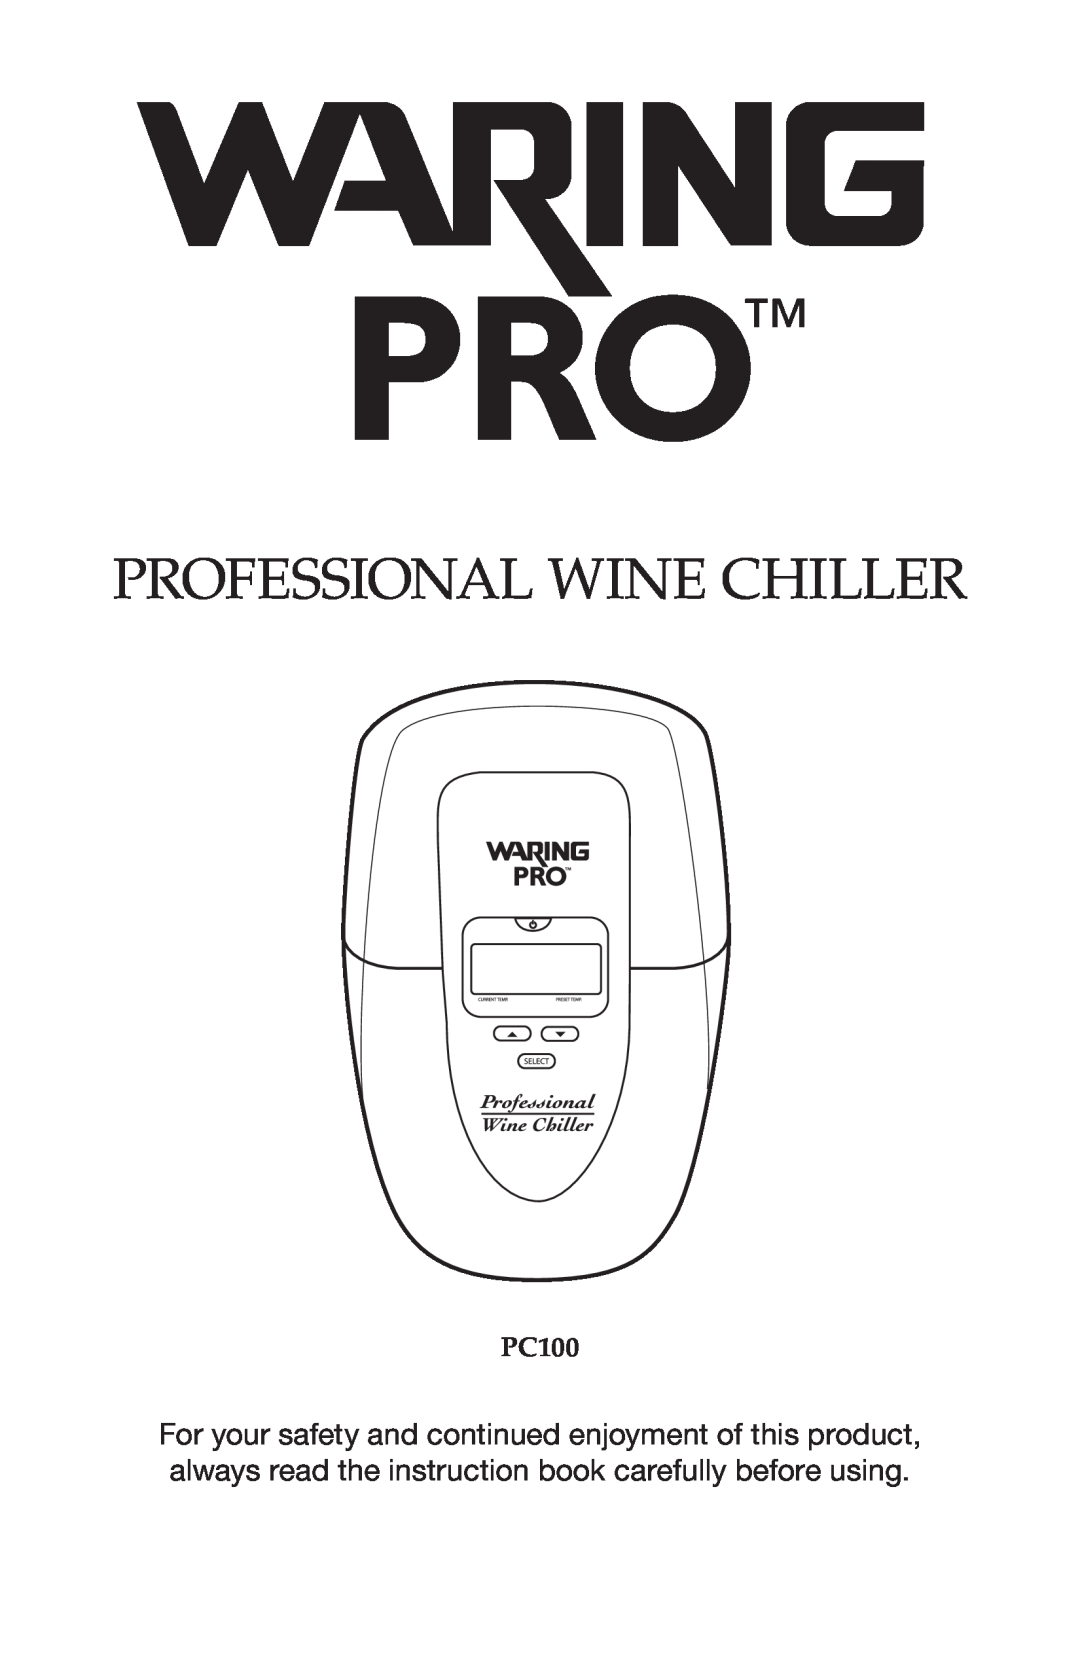 Waring PC100 manual Professional Wine Chiller 